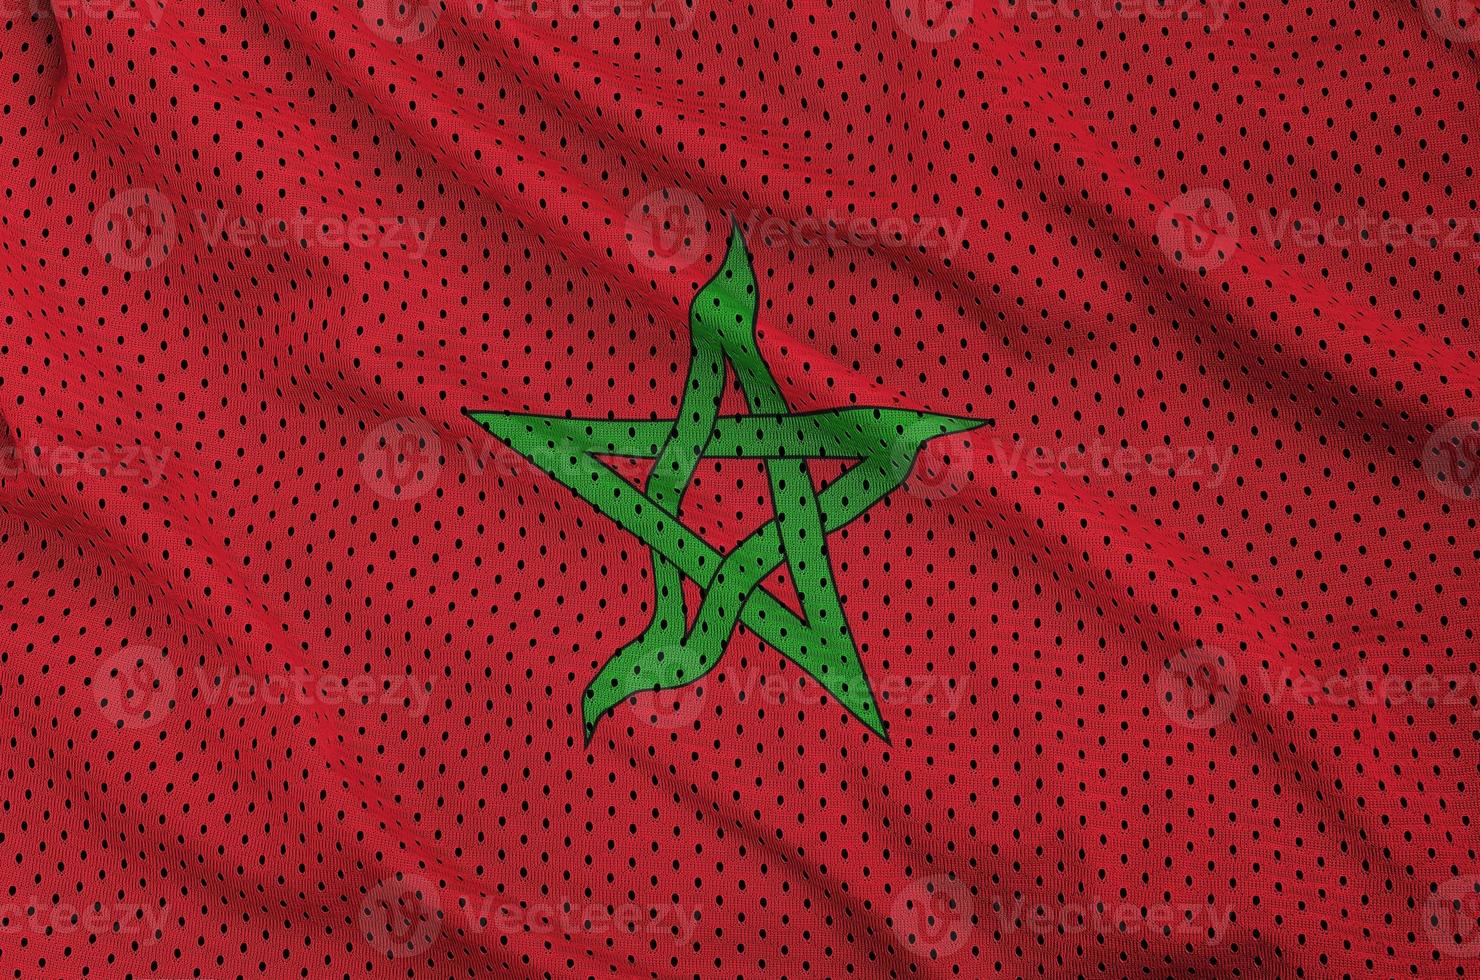 Morocco flag printed on a polyester nylon sportswear mesh fabric photo